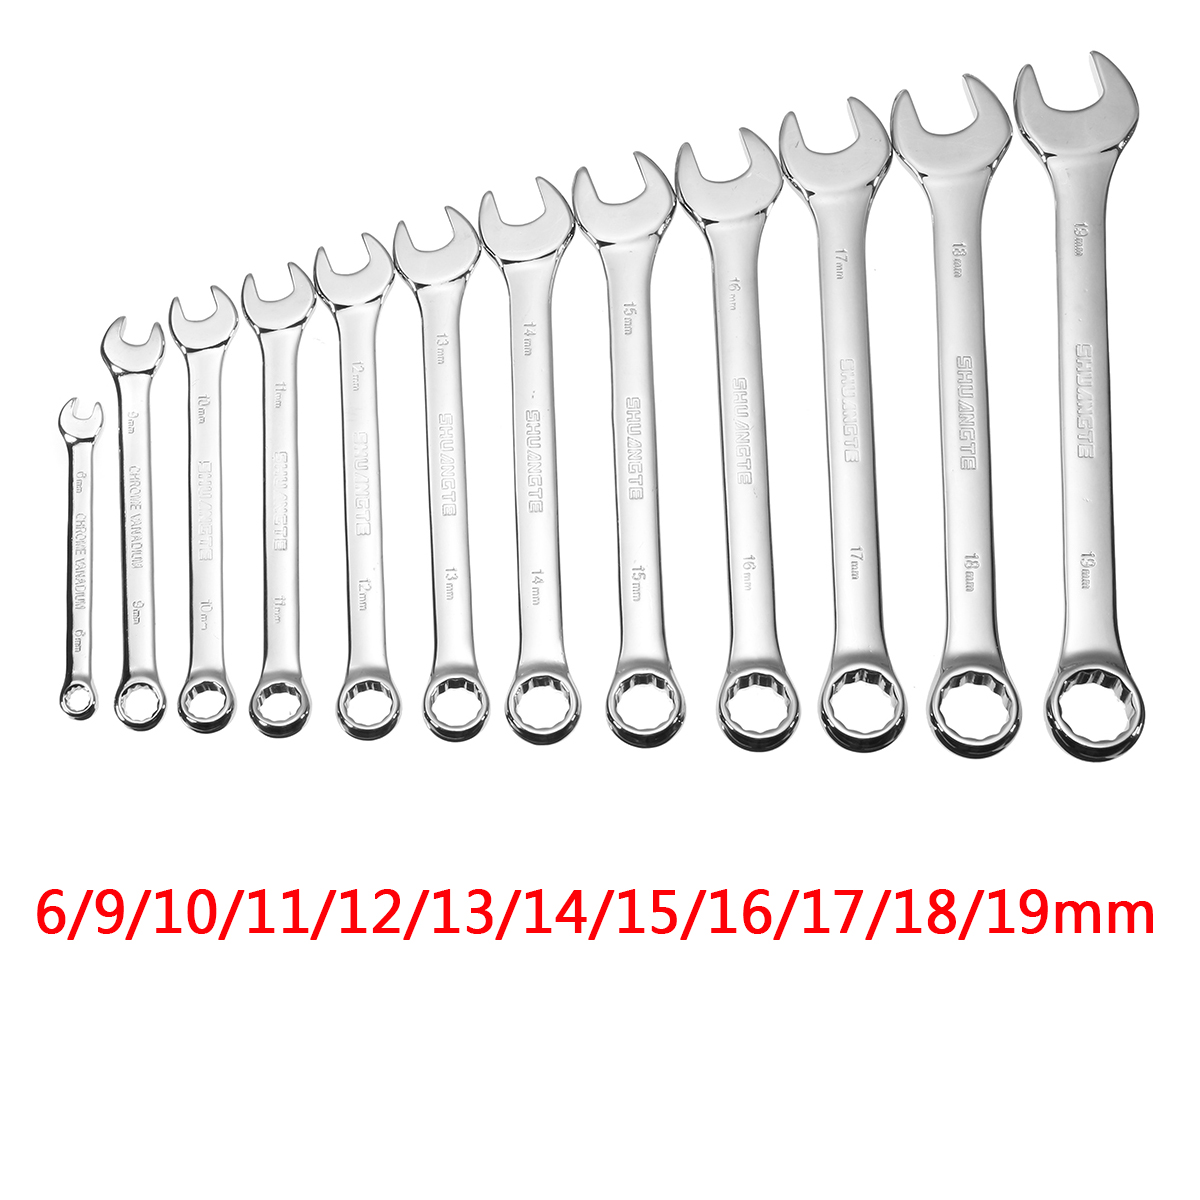 19mm Extra Long Metric Combination Spanner Wrench 285mm Chrome Vanadium Steel 